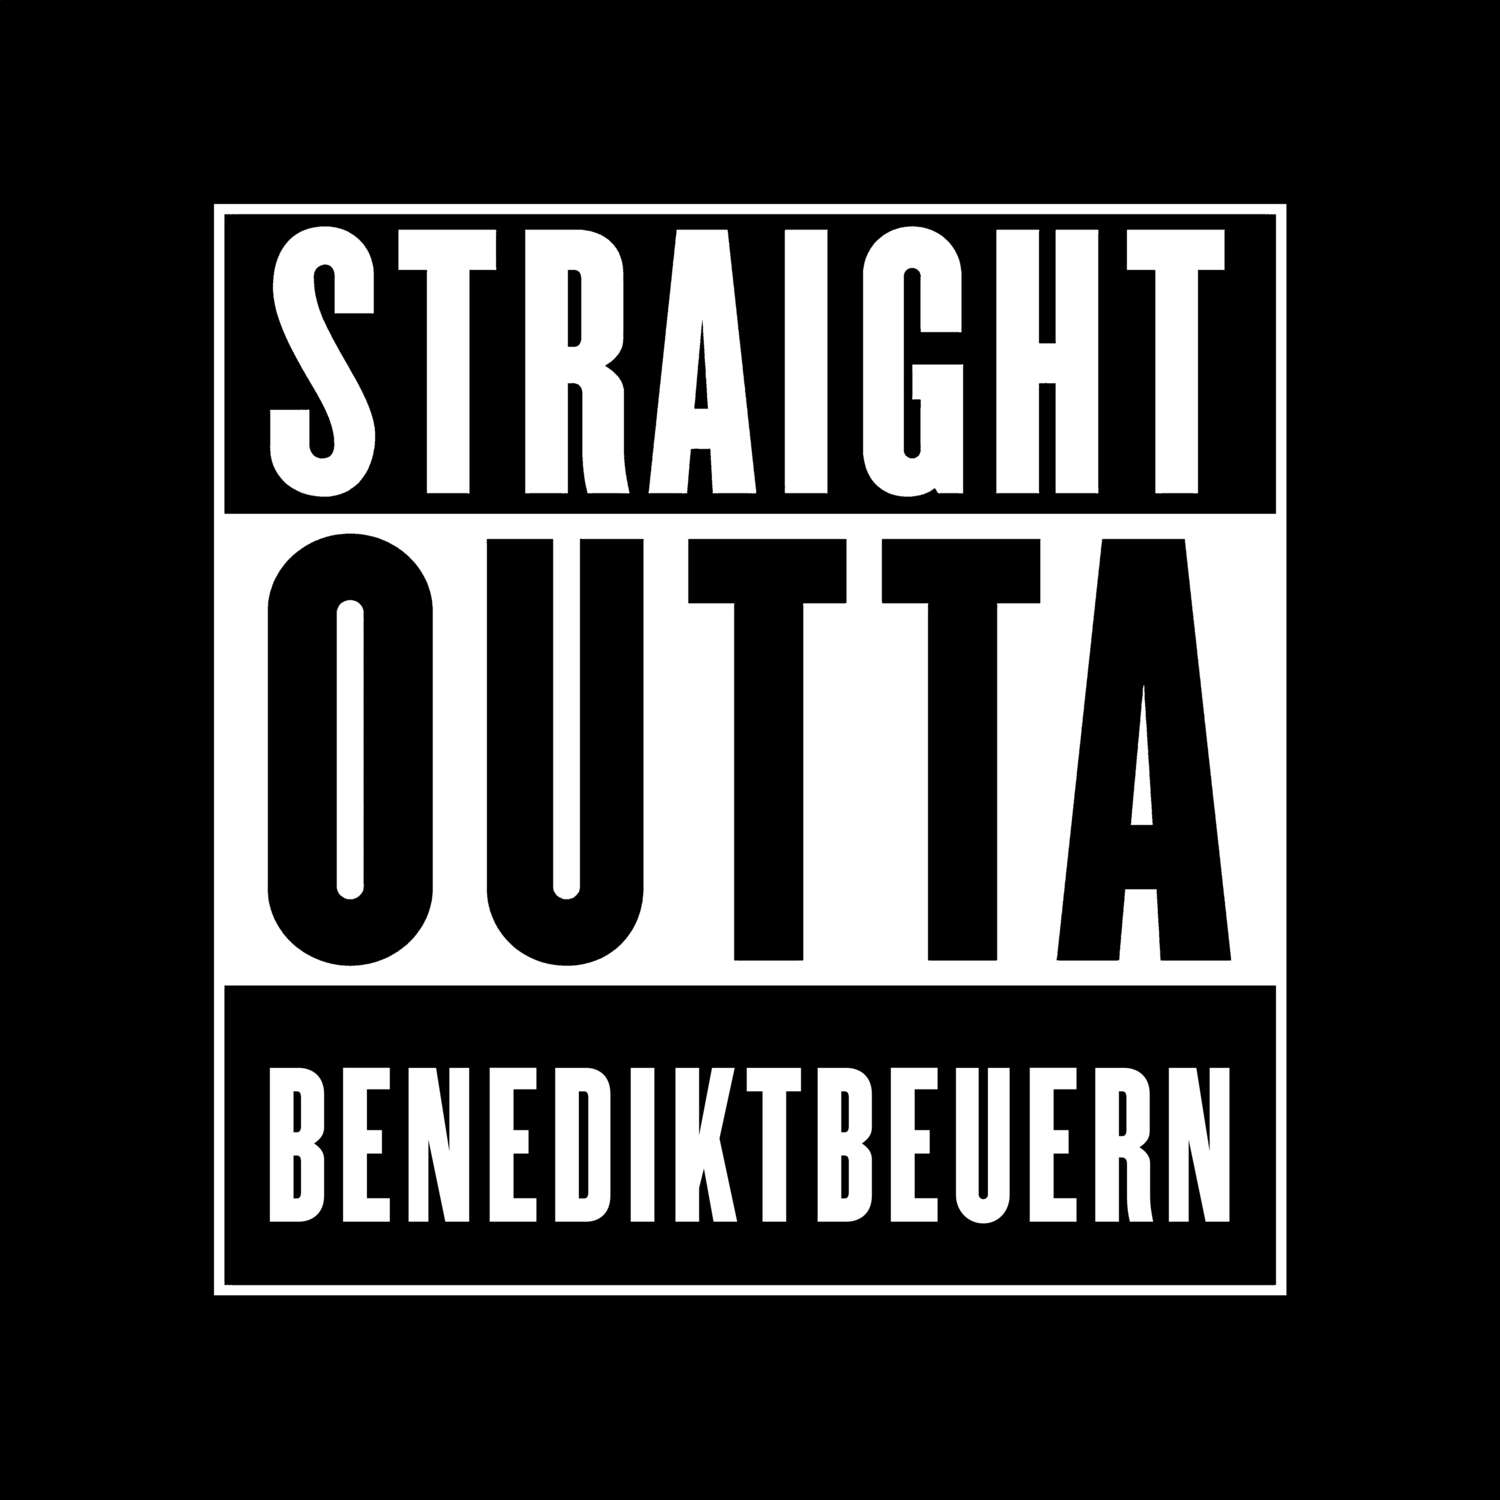 Benediktbeuern T-Shirt »Straight Outta«